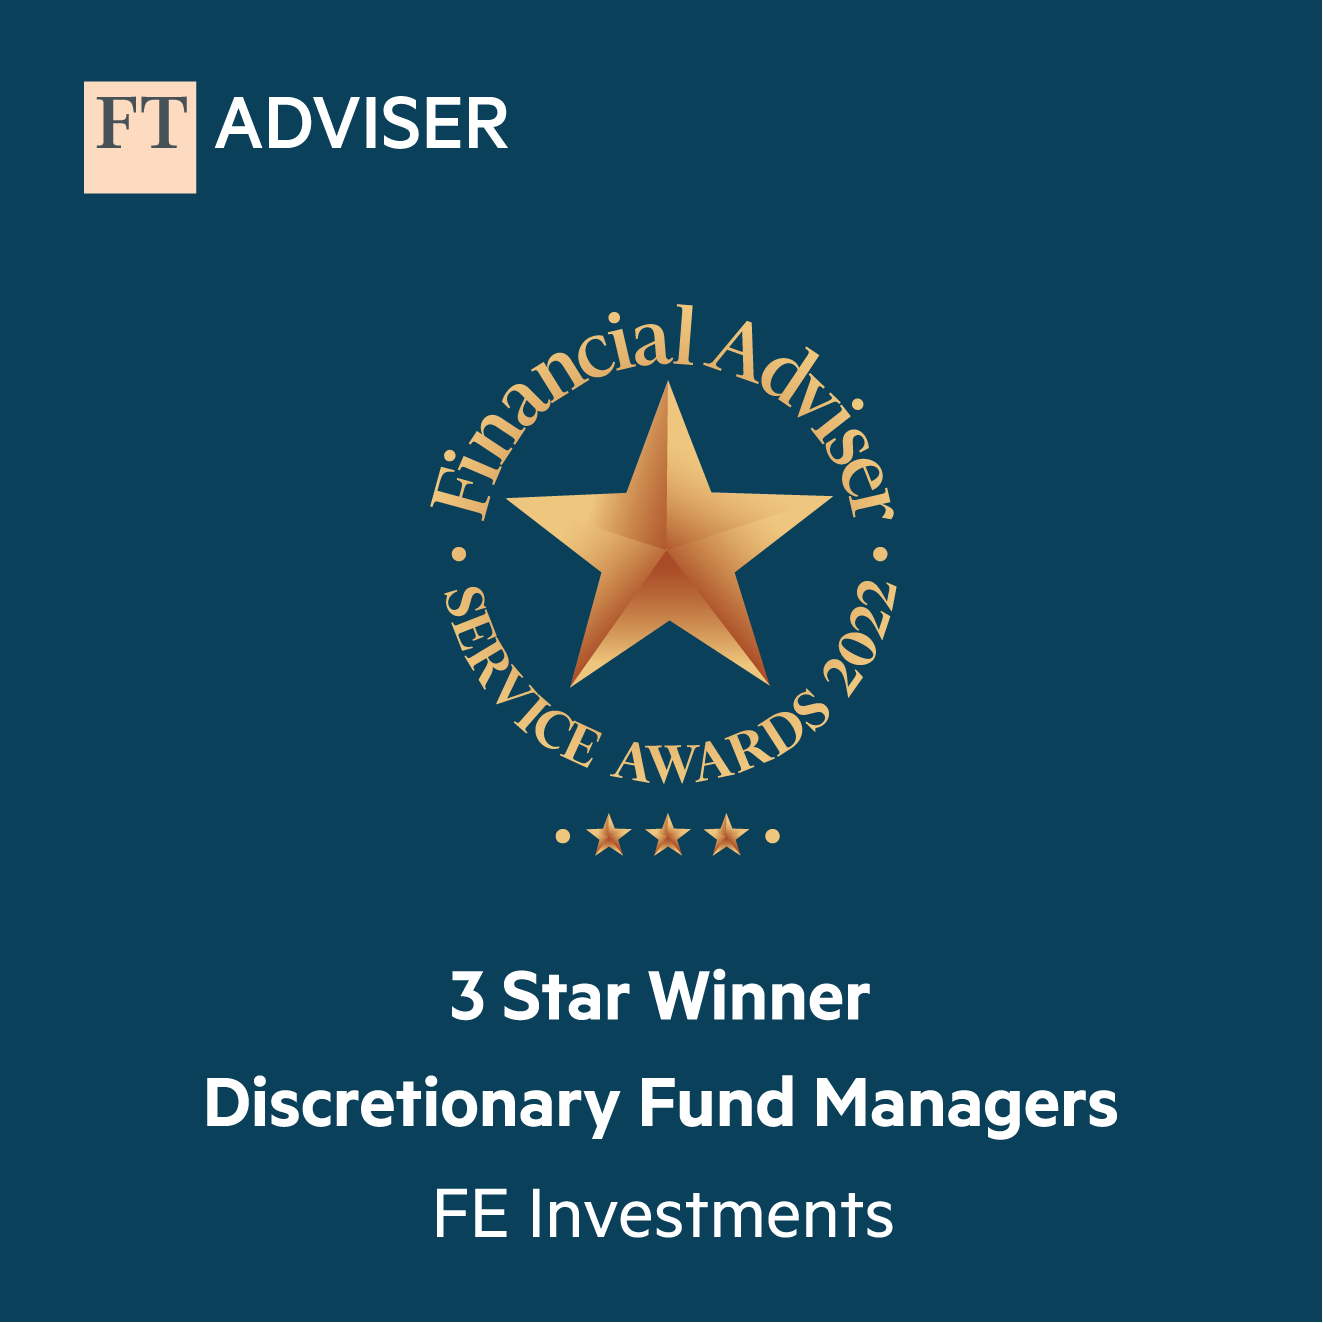 FT Adviser - Financial Adviser Service Awards 2022 )